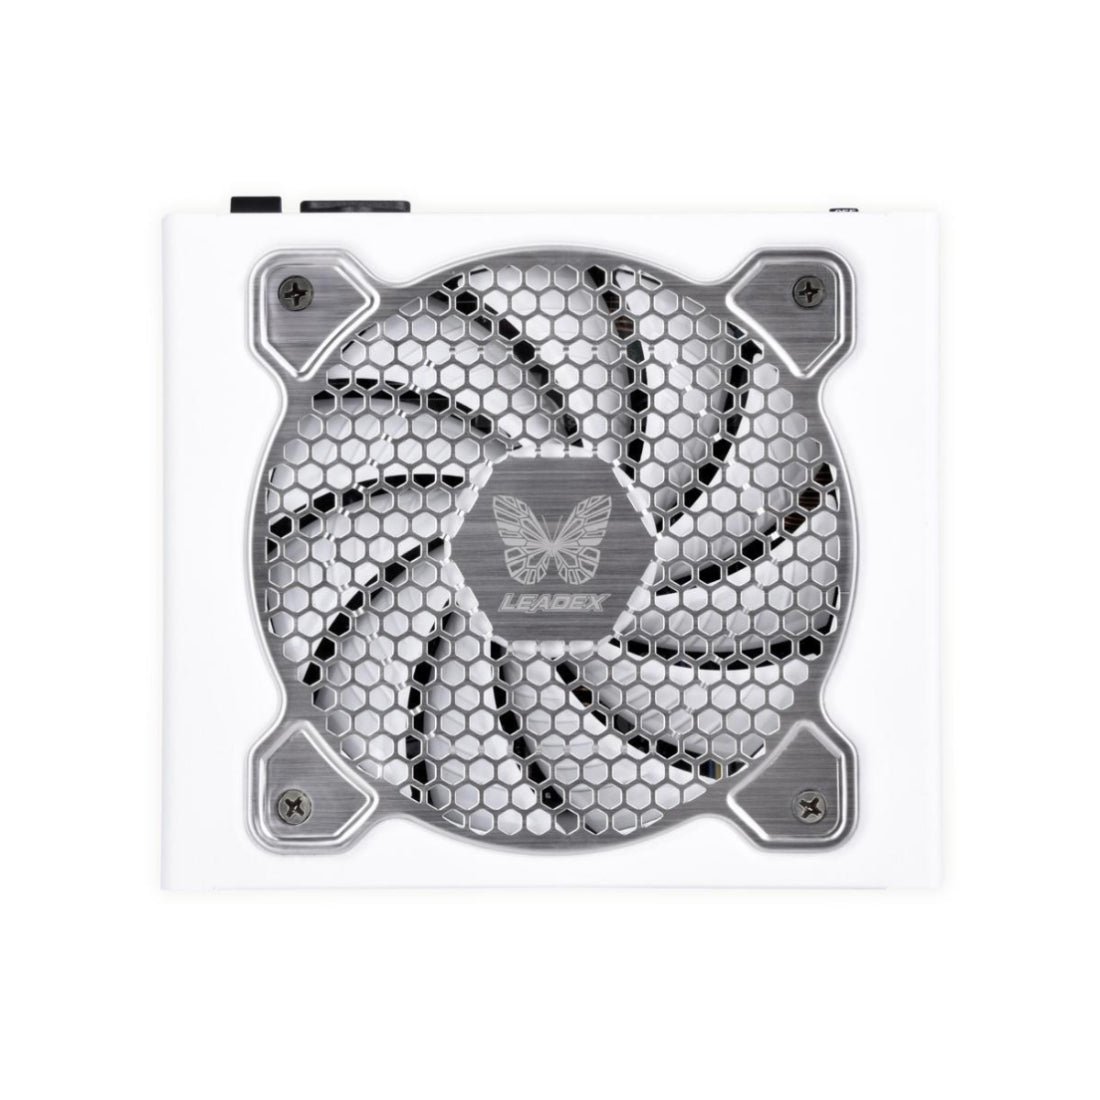 Super Flower Leadex V Platinum PRO 850W 80+ Fully Modular Power Supply - White - Store 974 | ستور ٩٧٤